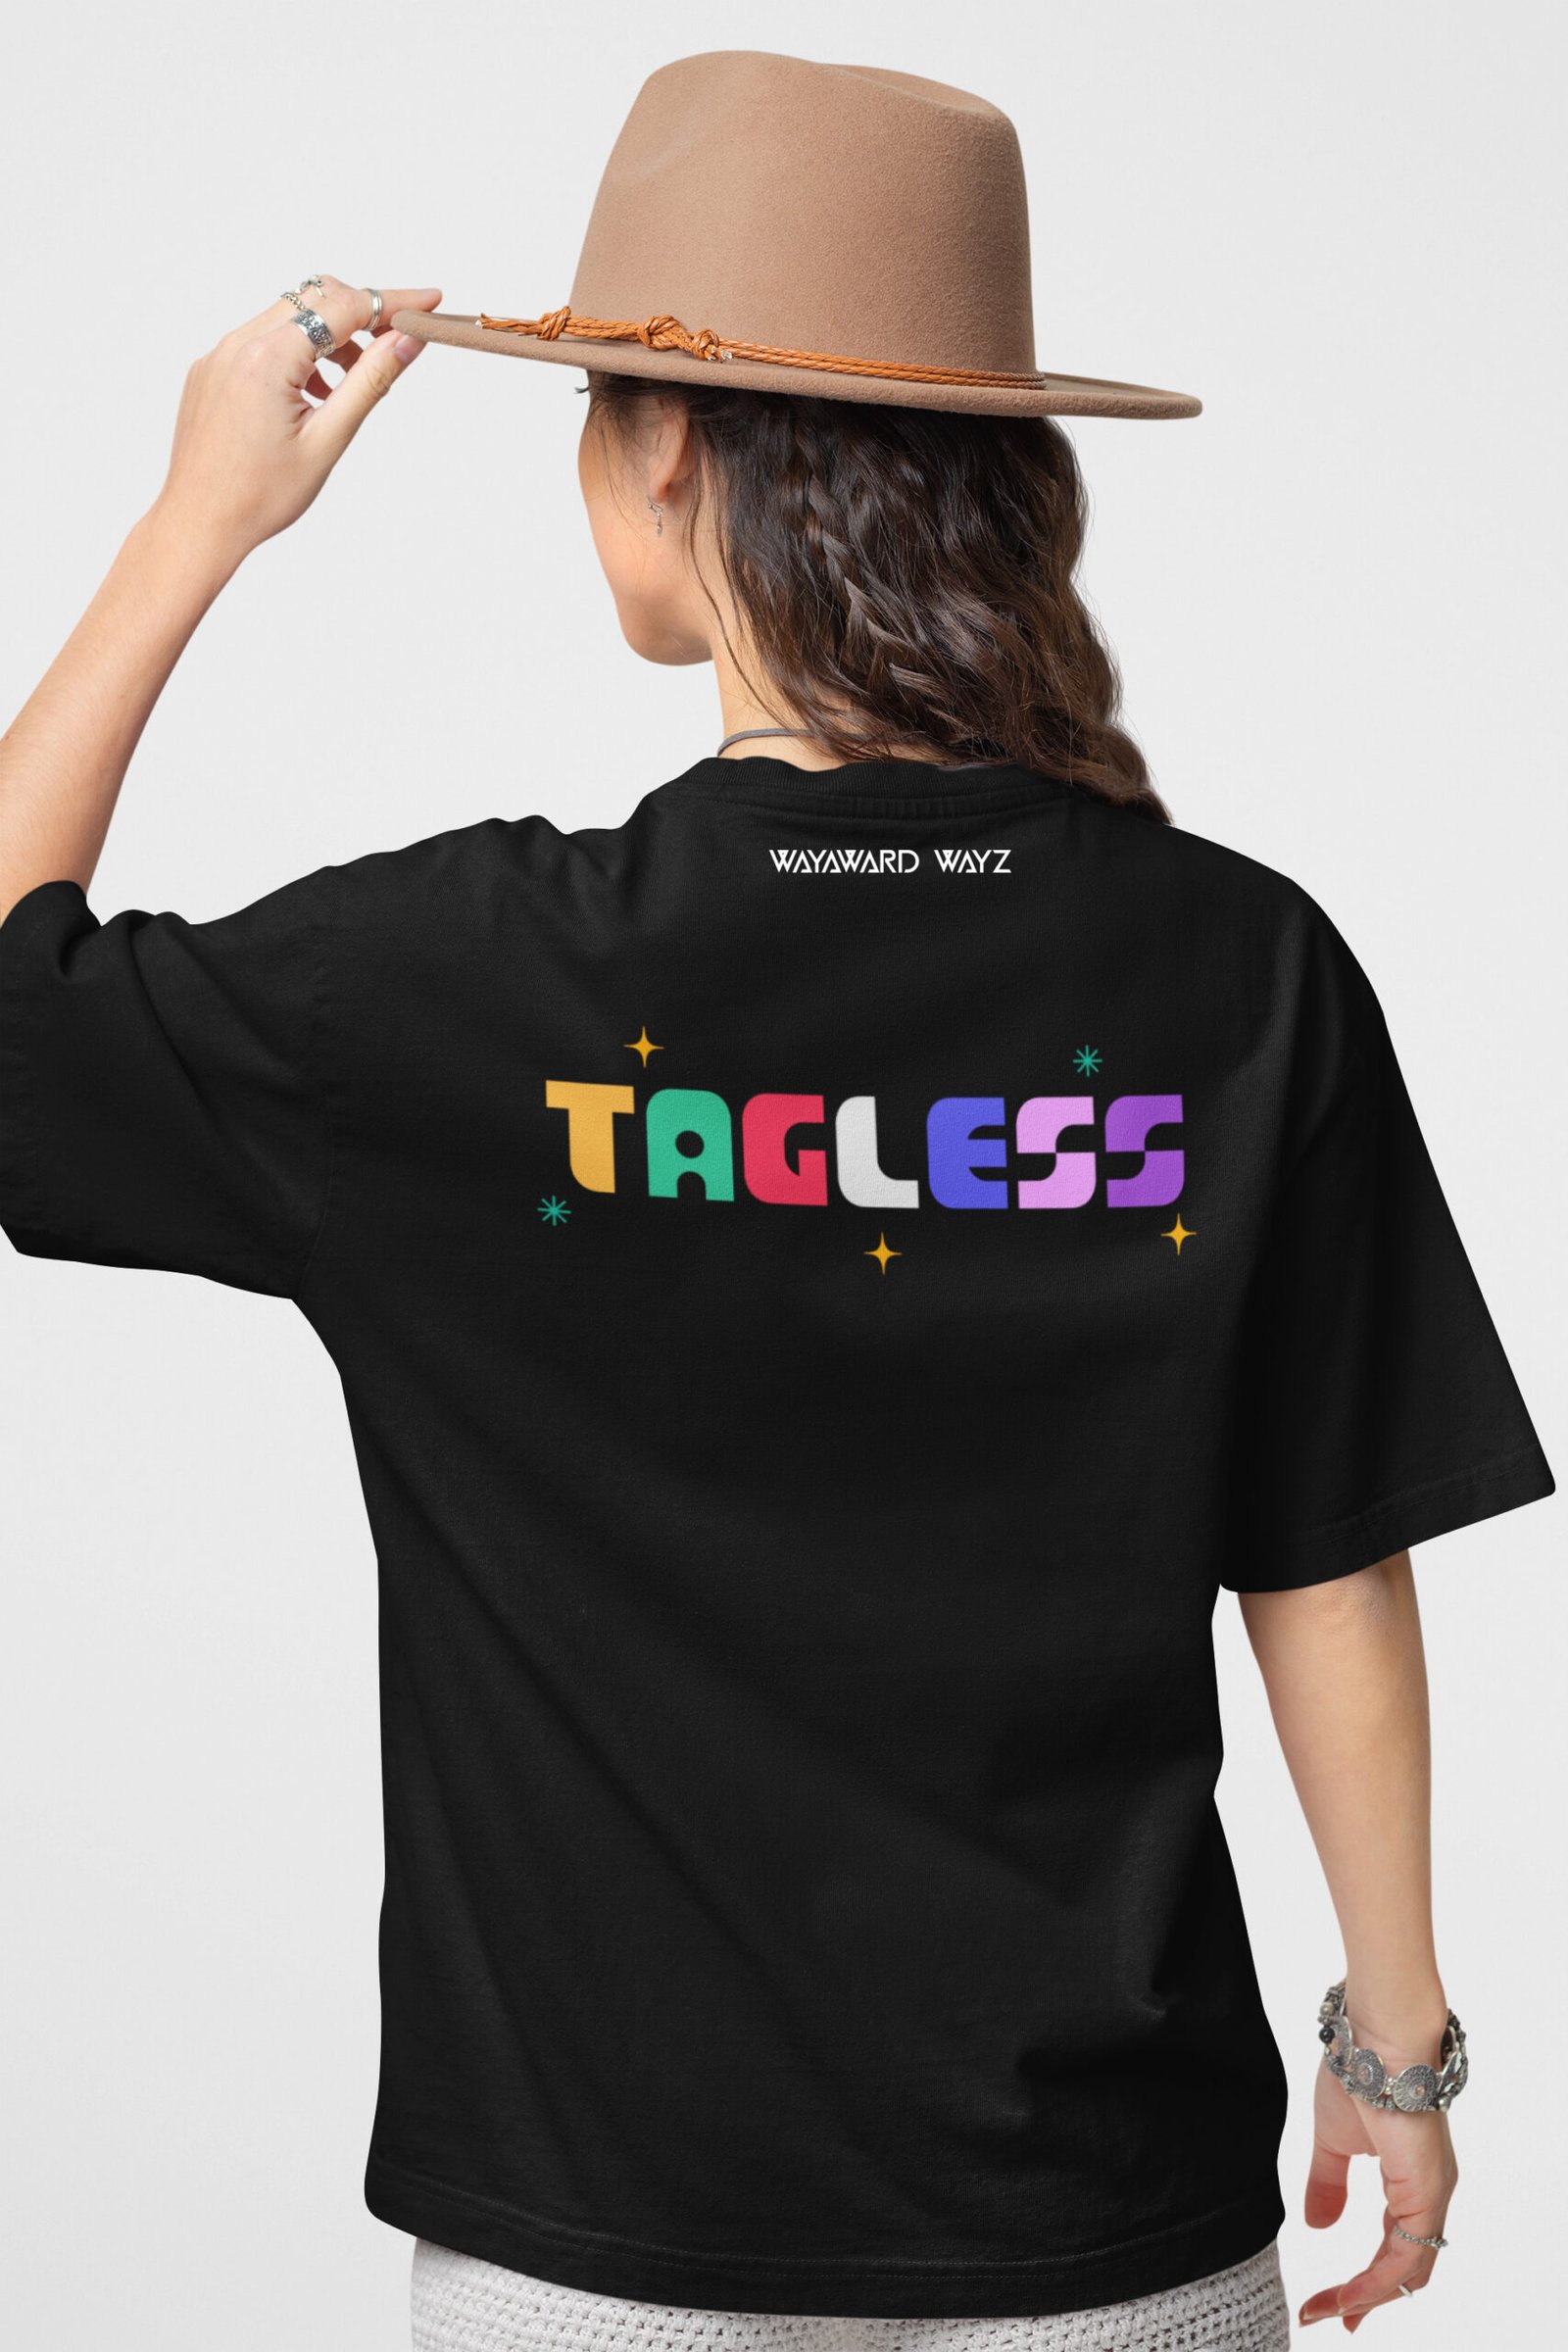 Tagless T-Shirt by Wayward Wayz Back